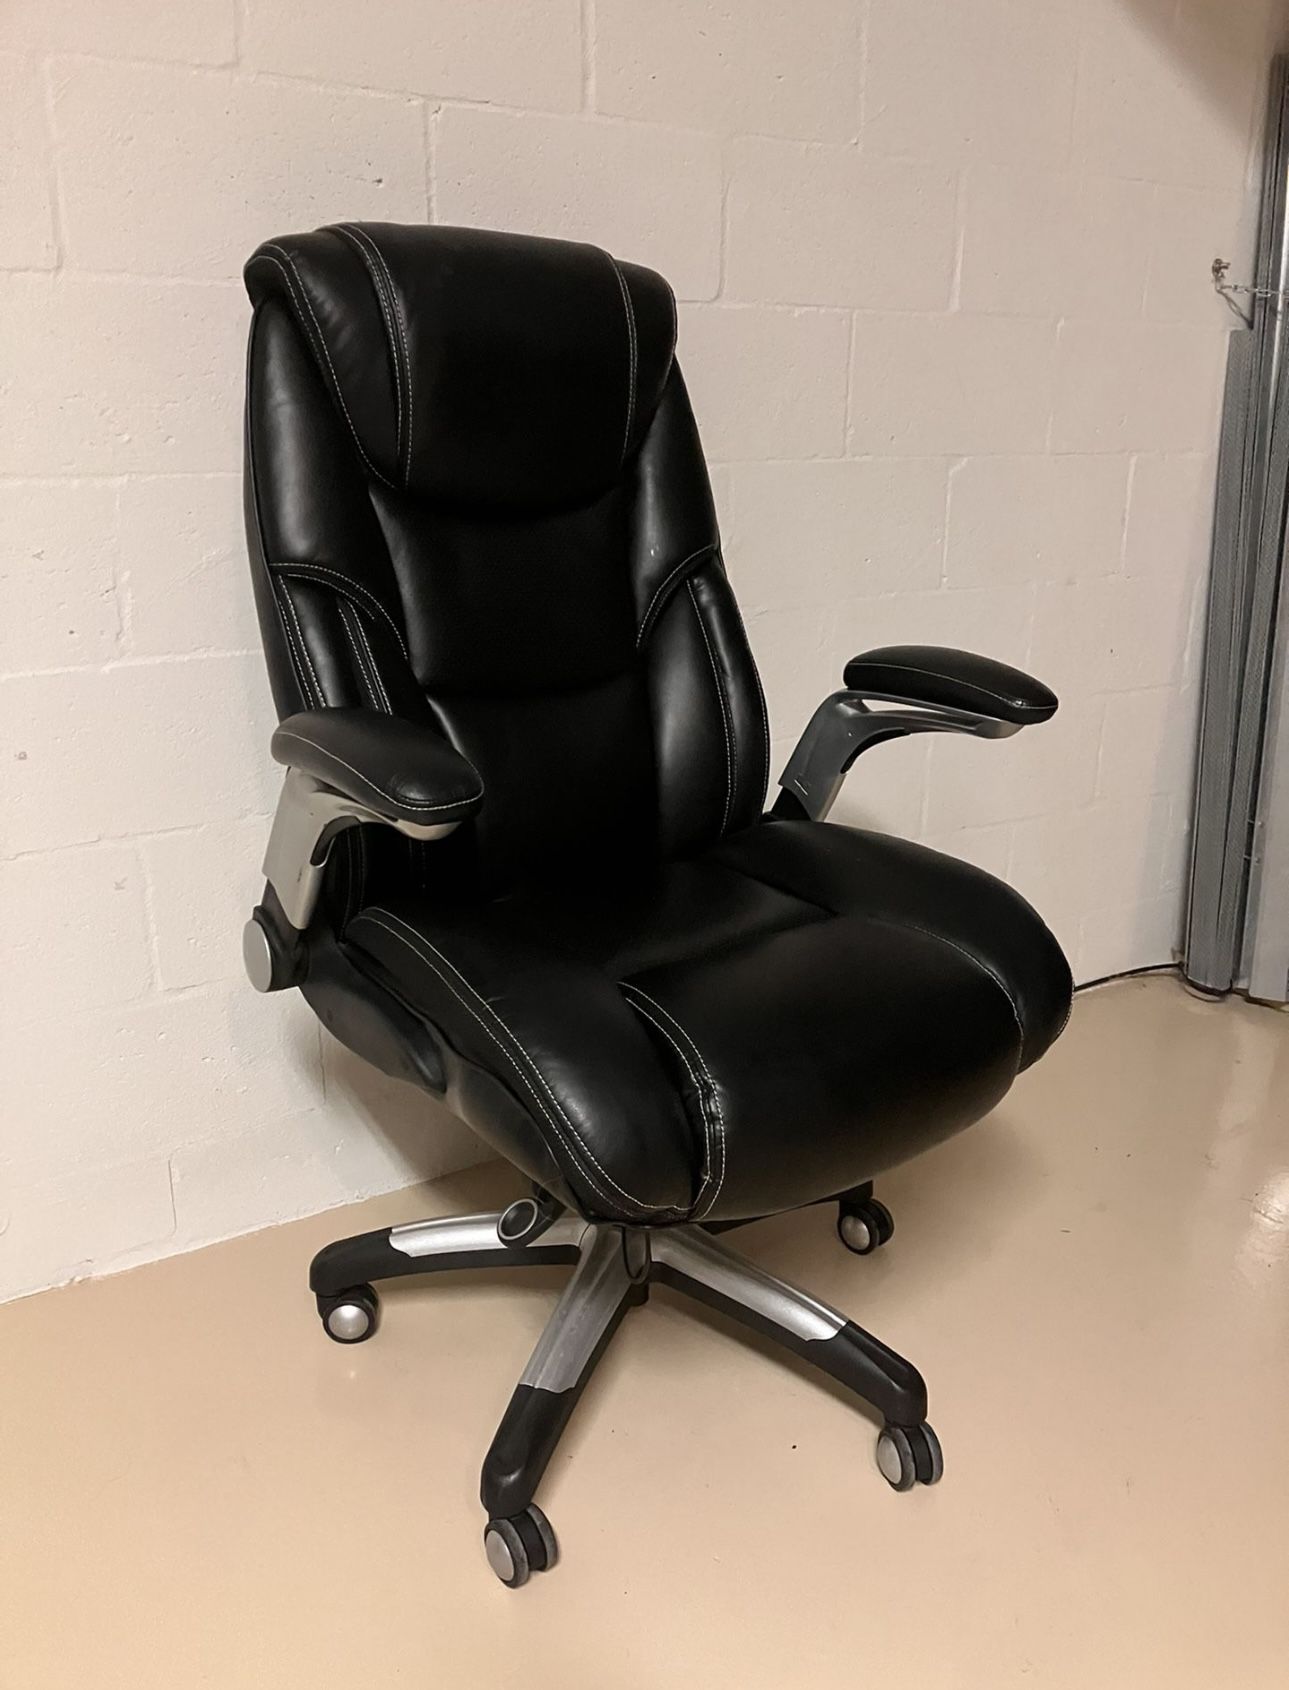 Brand New Desk Chair 